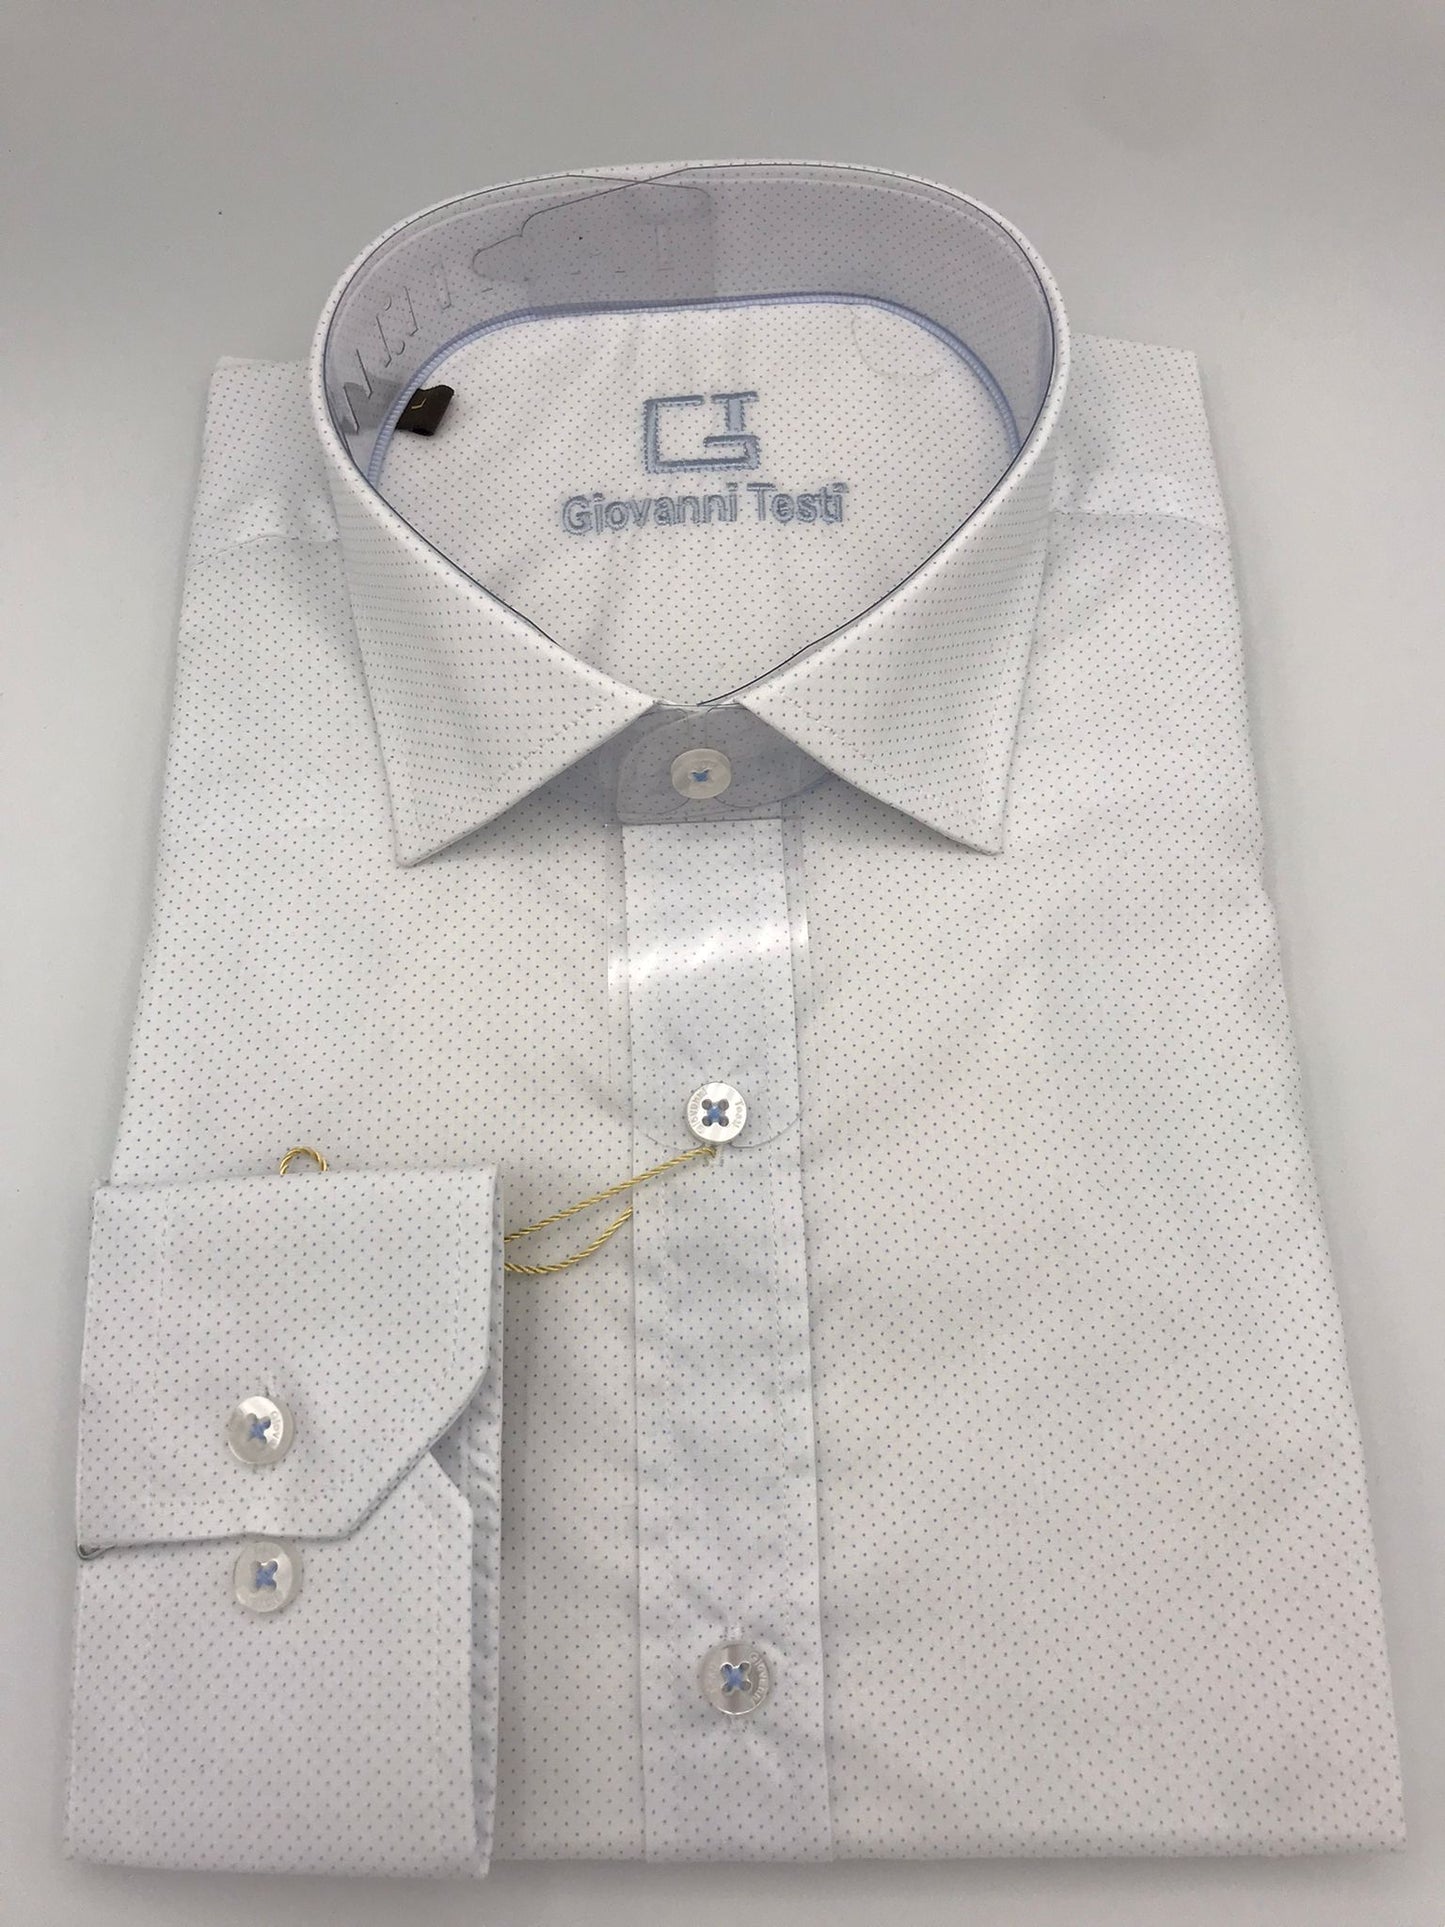 Shirt GT-10021 WHITE